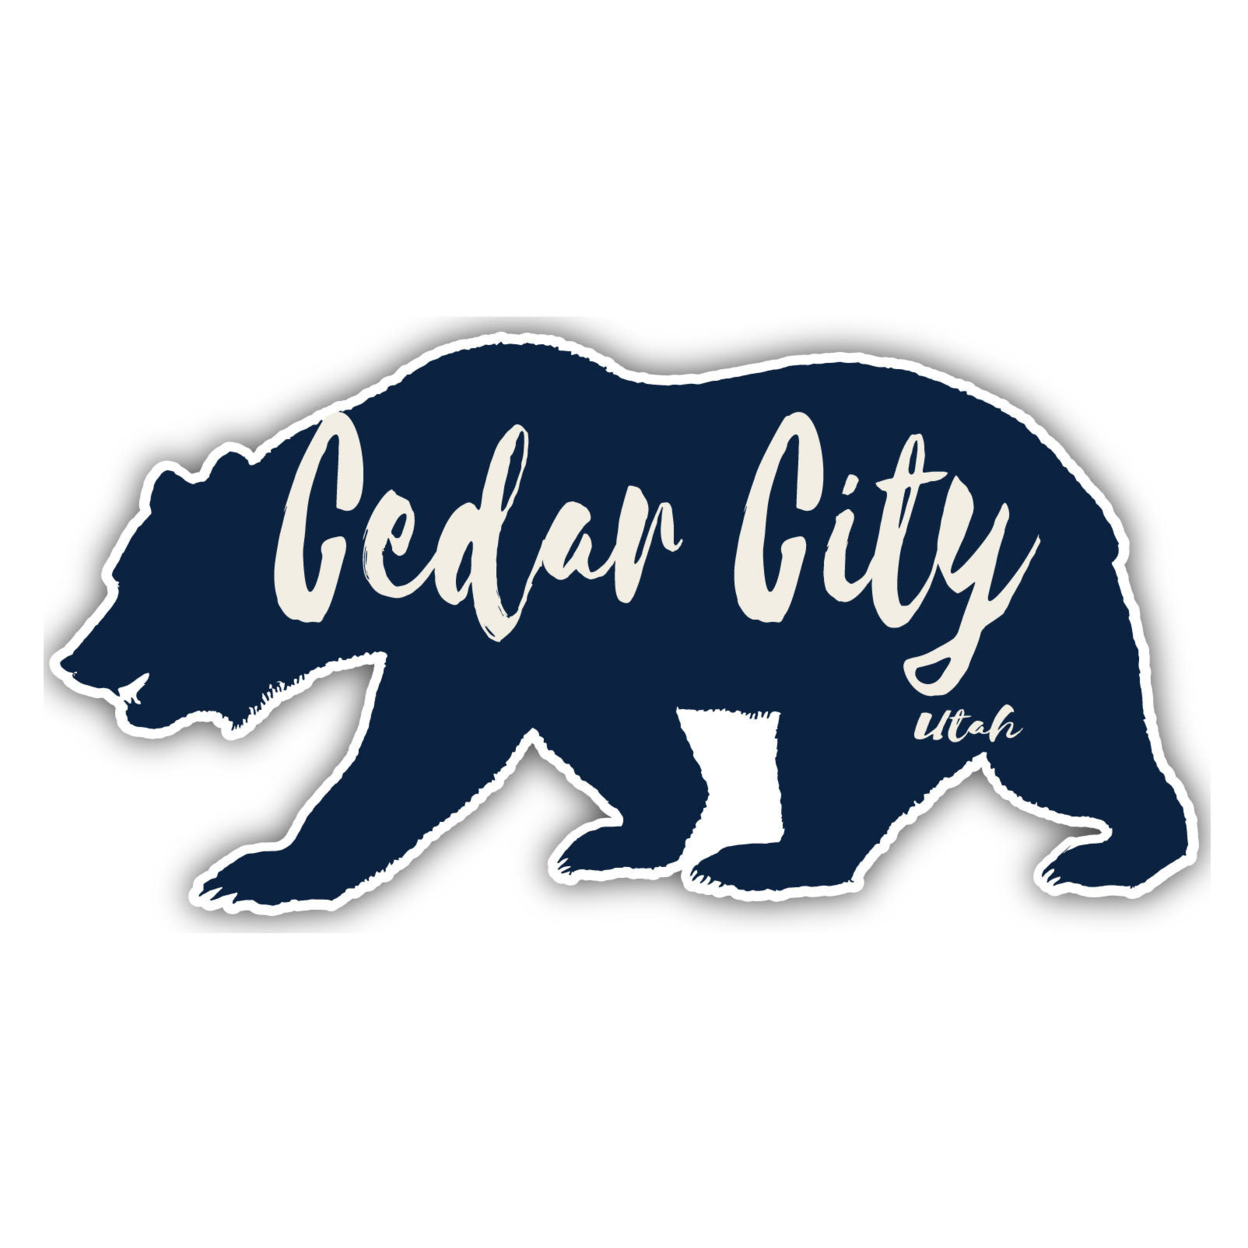 Cedar City Utah Souvenir Decorative Stickers (Choose Theme And Size) - 4-Pack, 10-Inch, Bear